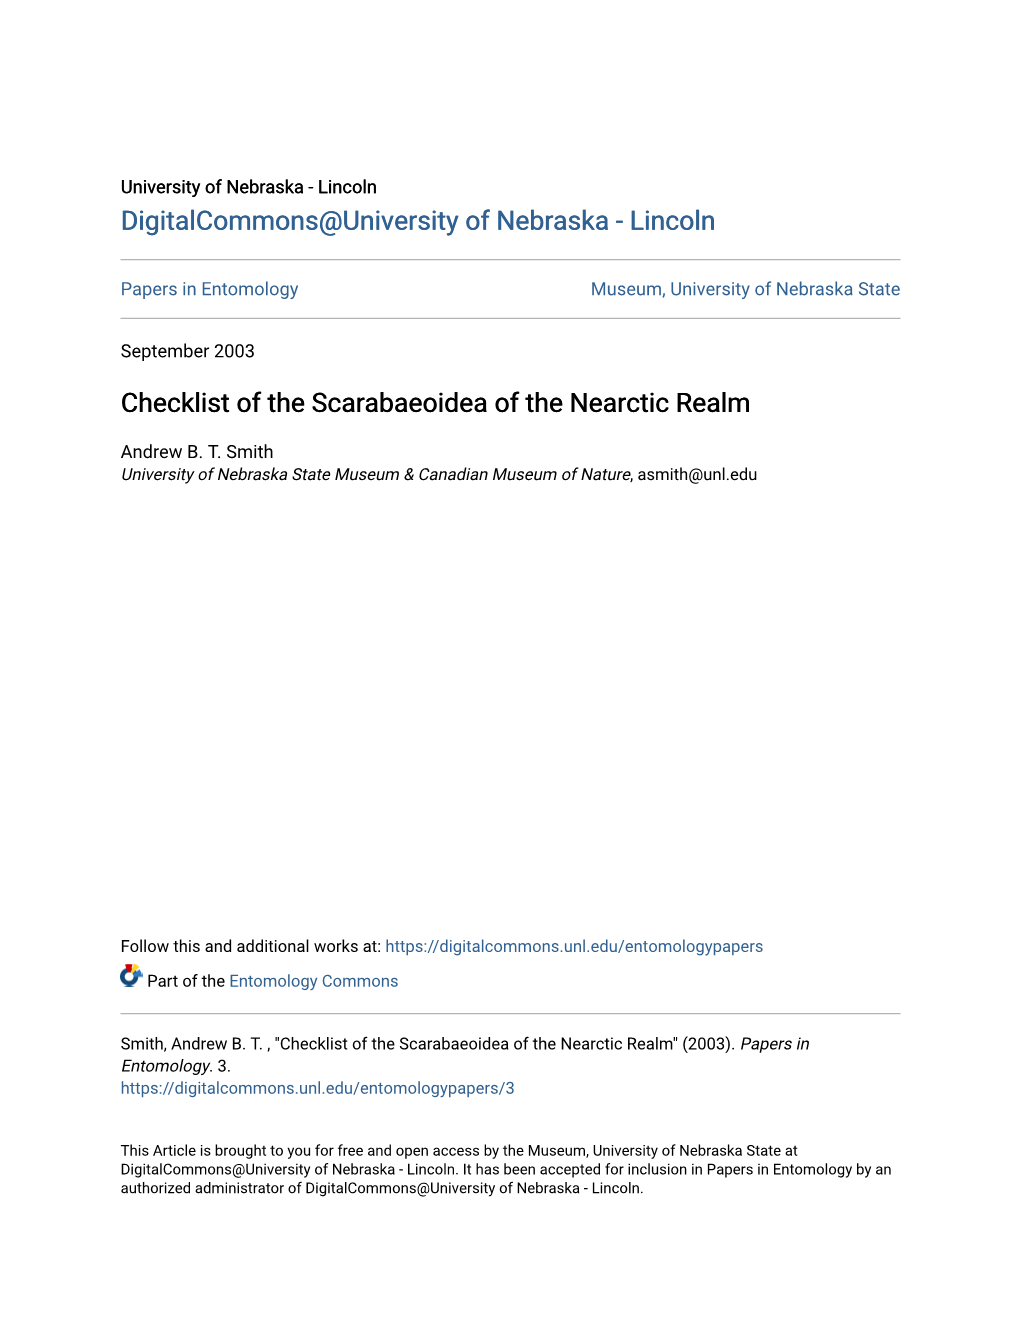 Checklist of the Scarabaeoidea of the Nearctic Realm